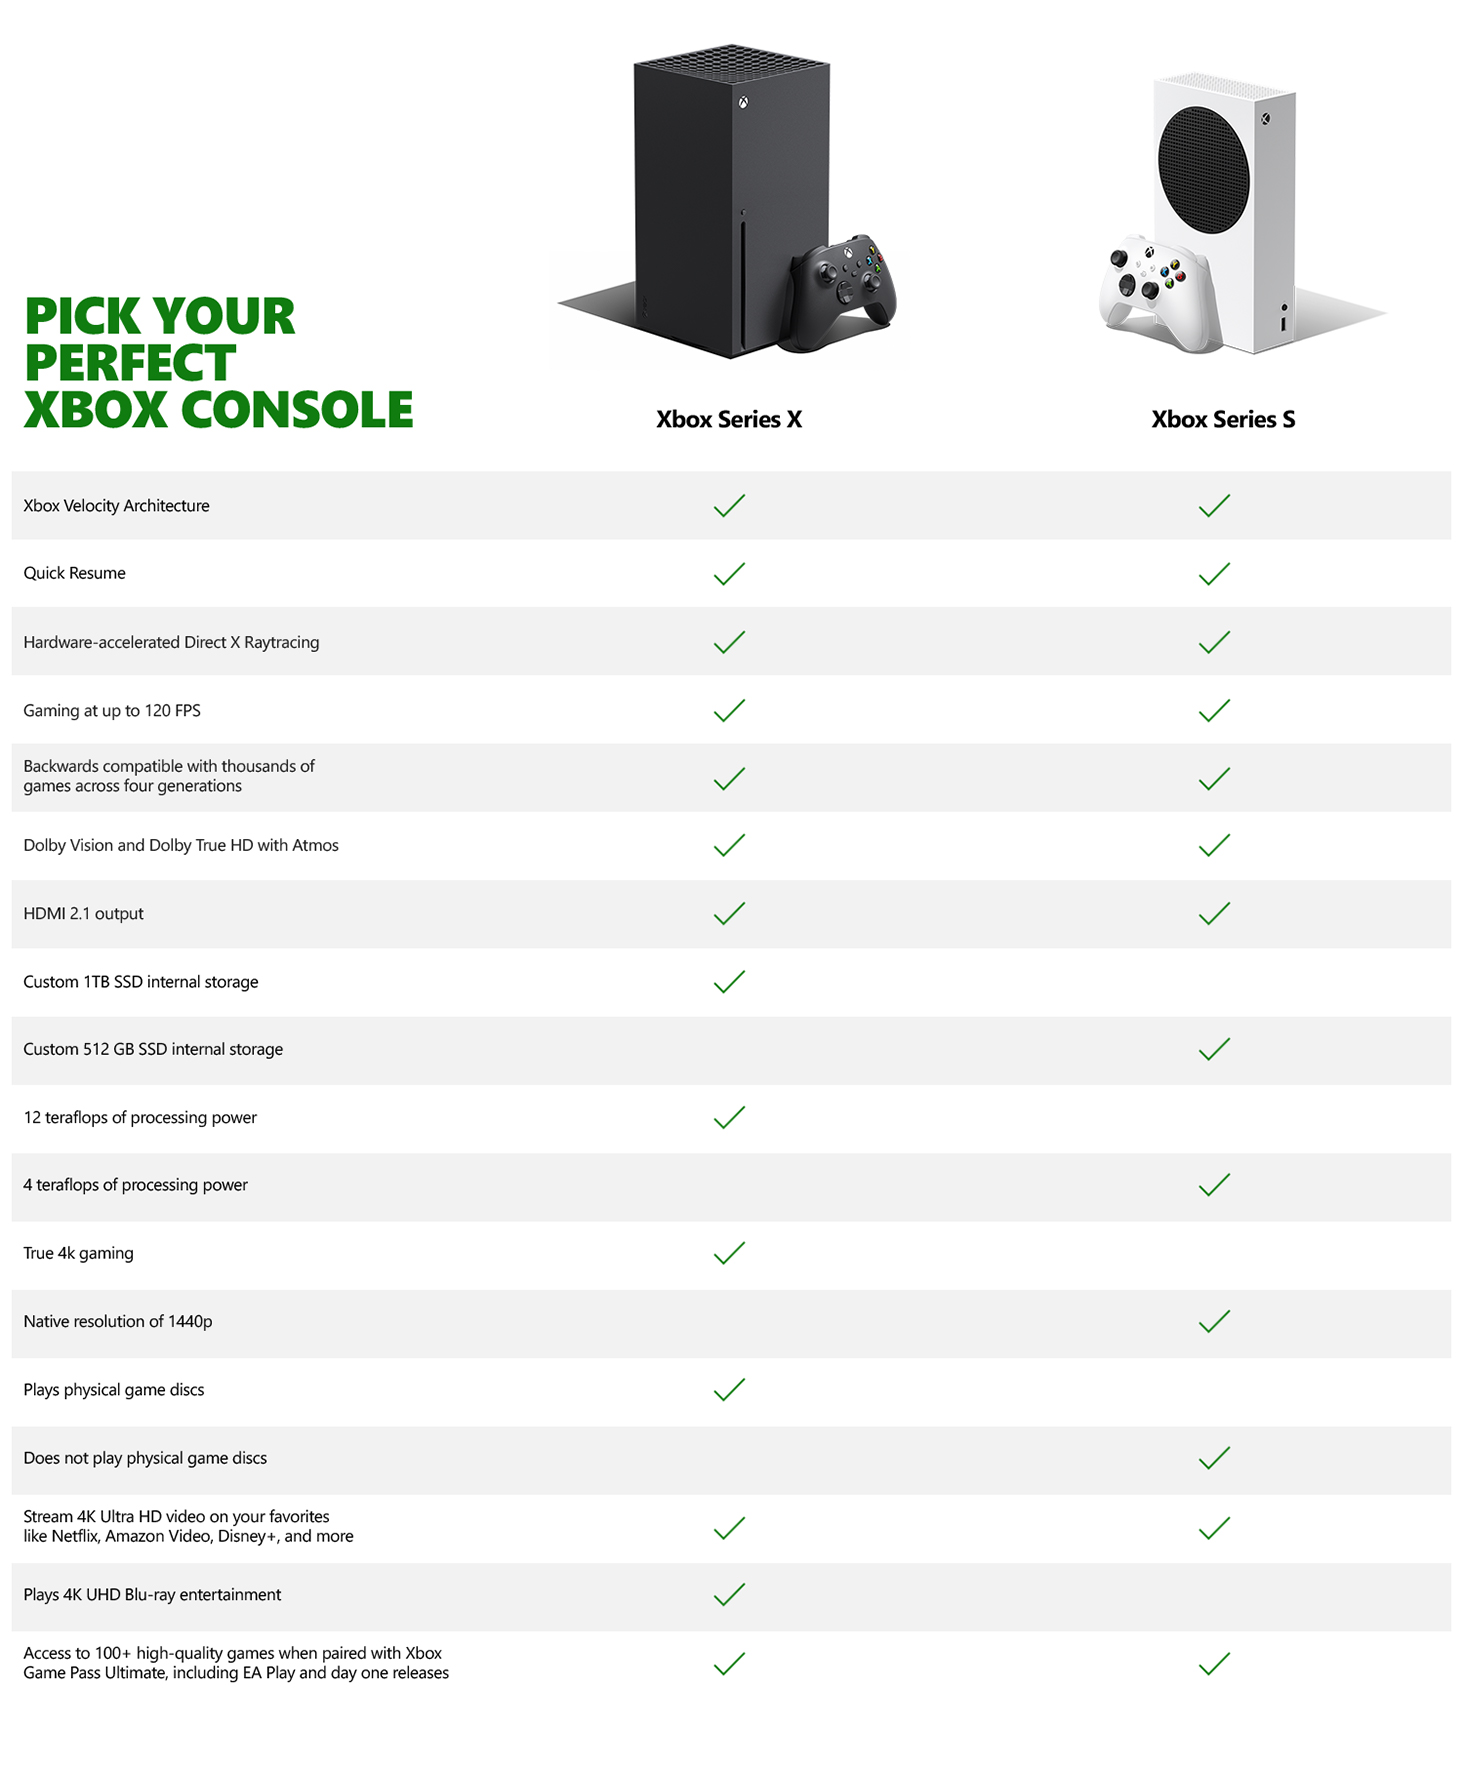 Microsoft Xbox Series X - Game console - 8K - HDR - 1 TB SSD